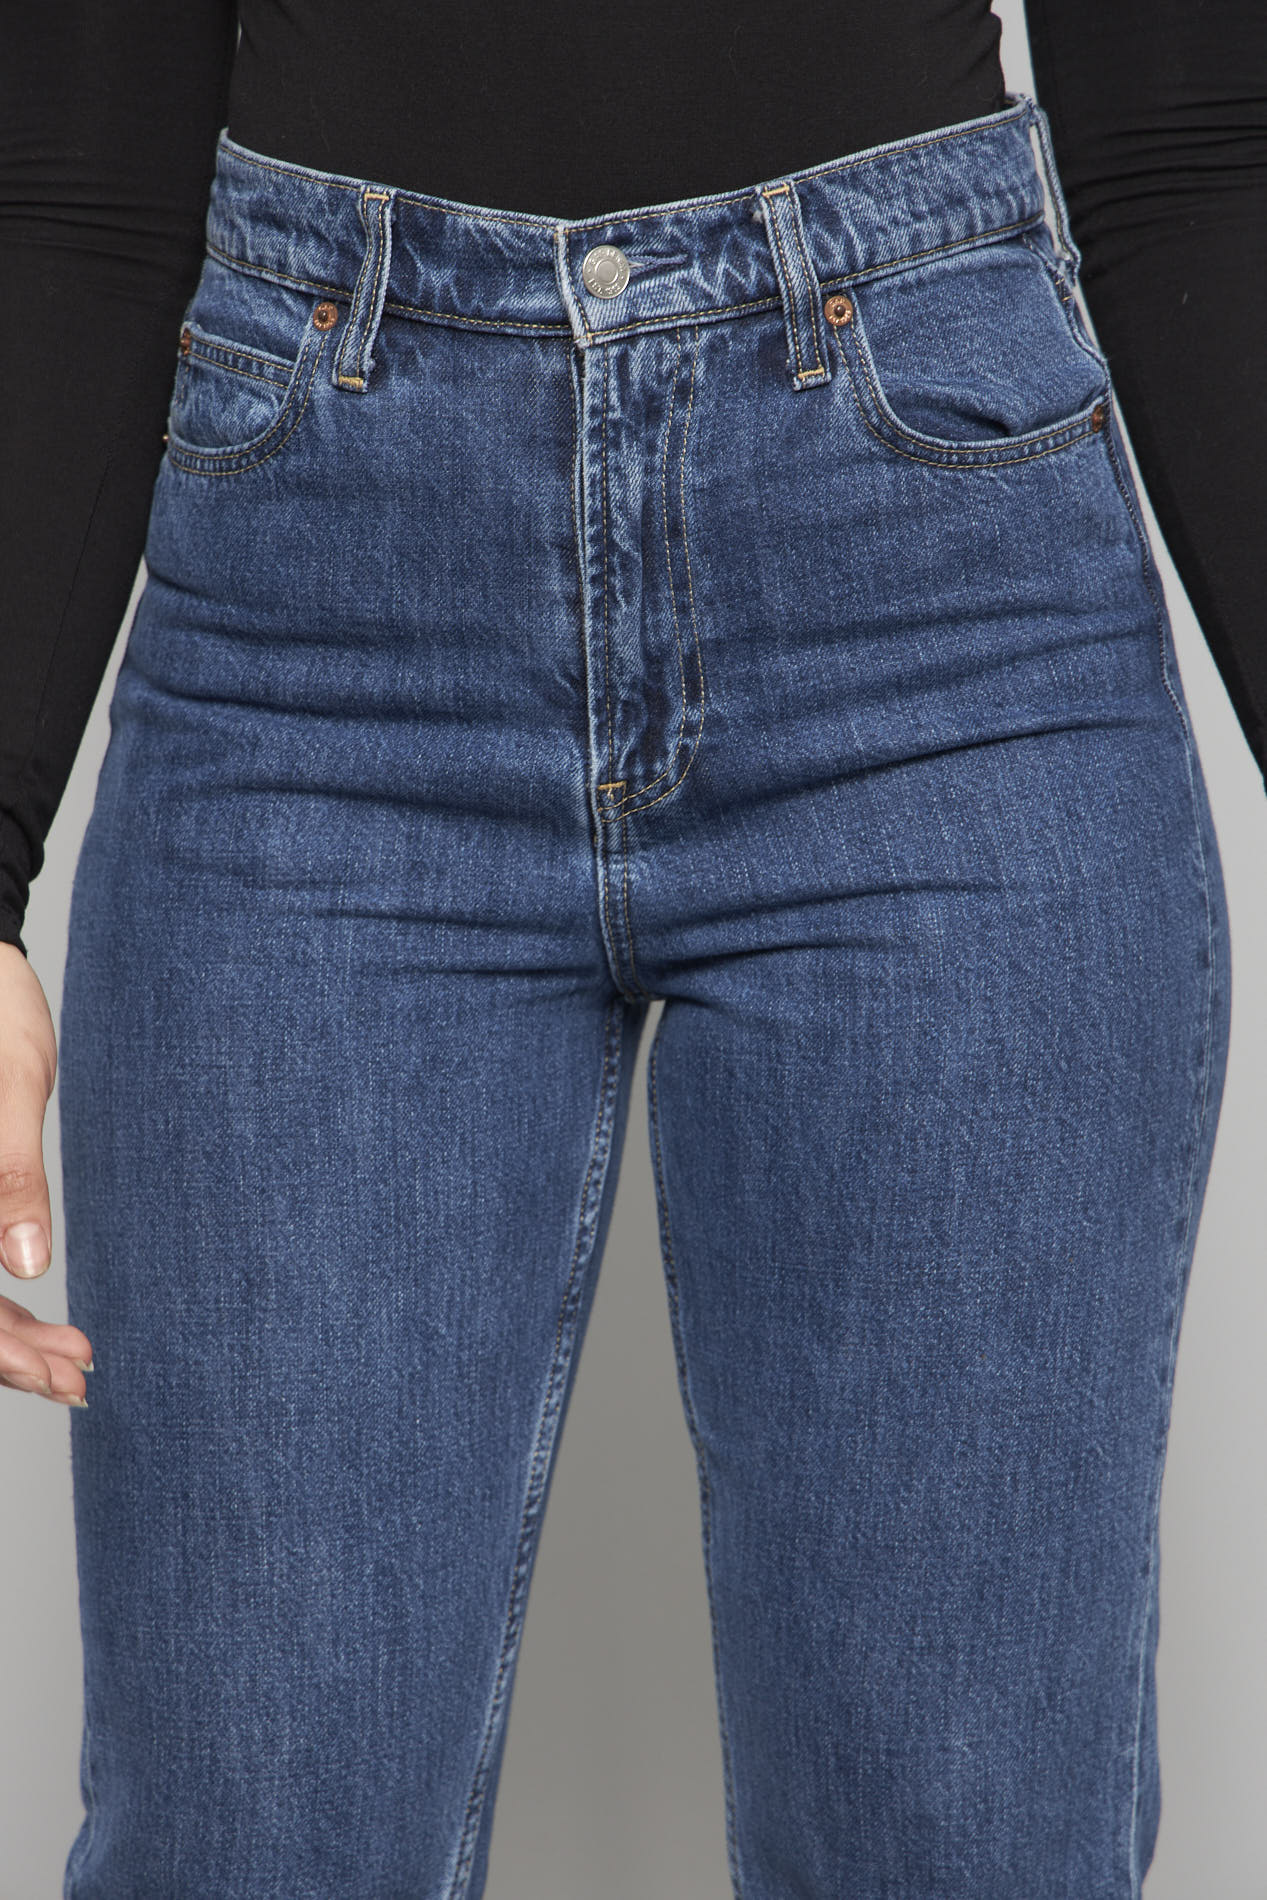 Jeans casual  azul gap talla 38 750